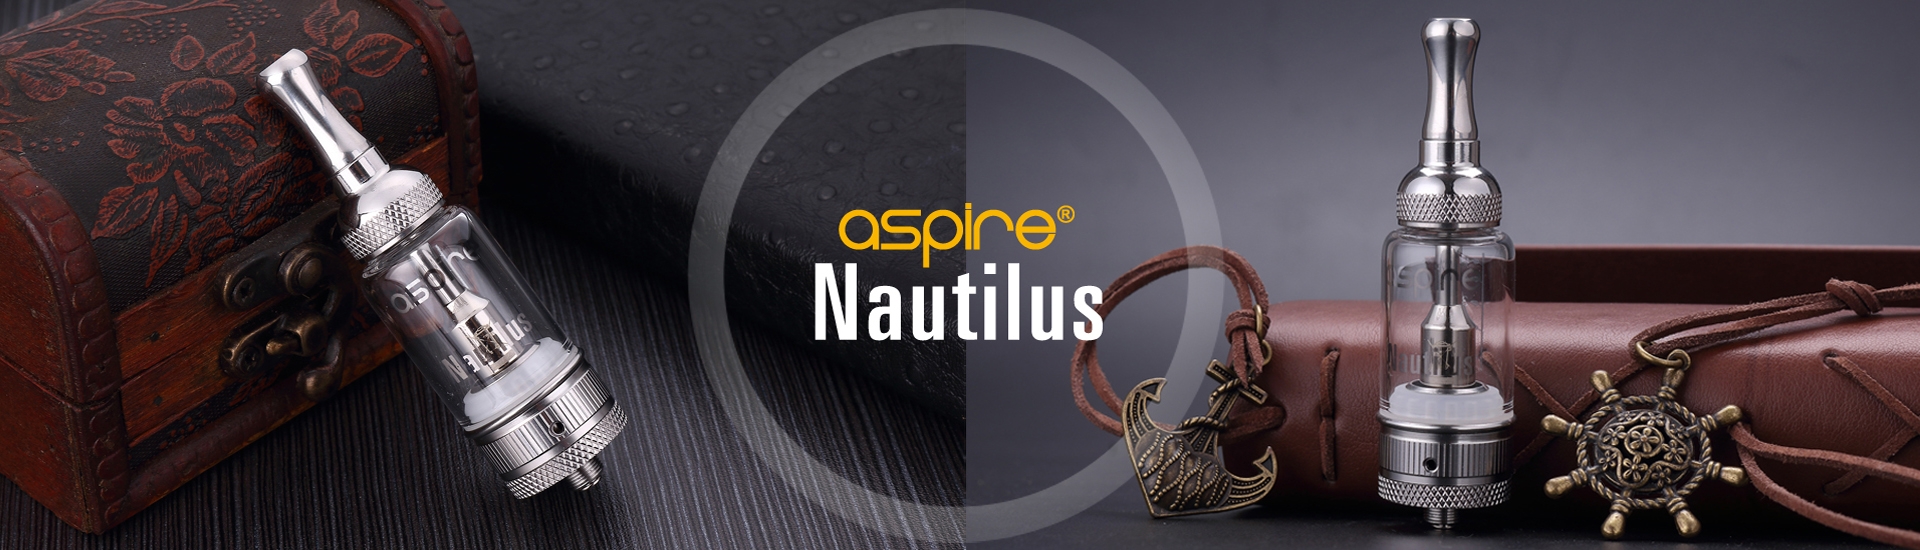 Aspire nautilus 5ml presentation